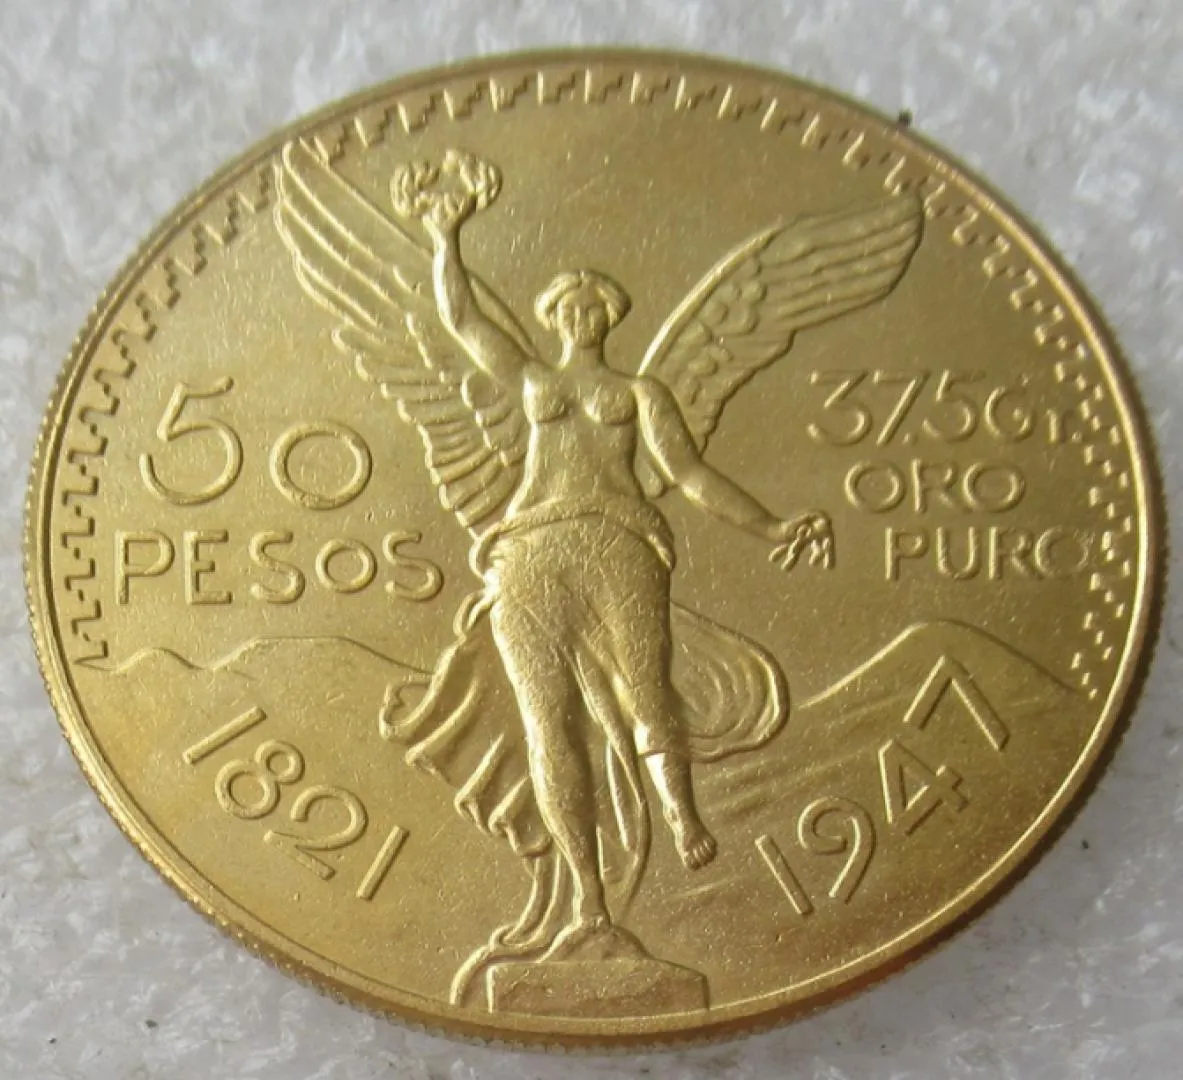 19211947 10PCSクラフトメキシコ50ペソゴールドメッキコインホームデコレーションアクセサリー2710614